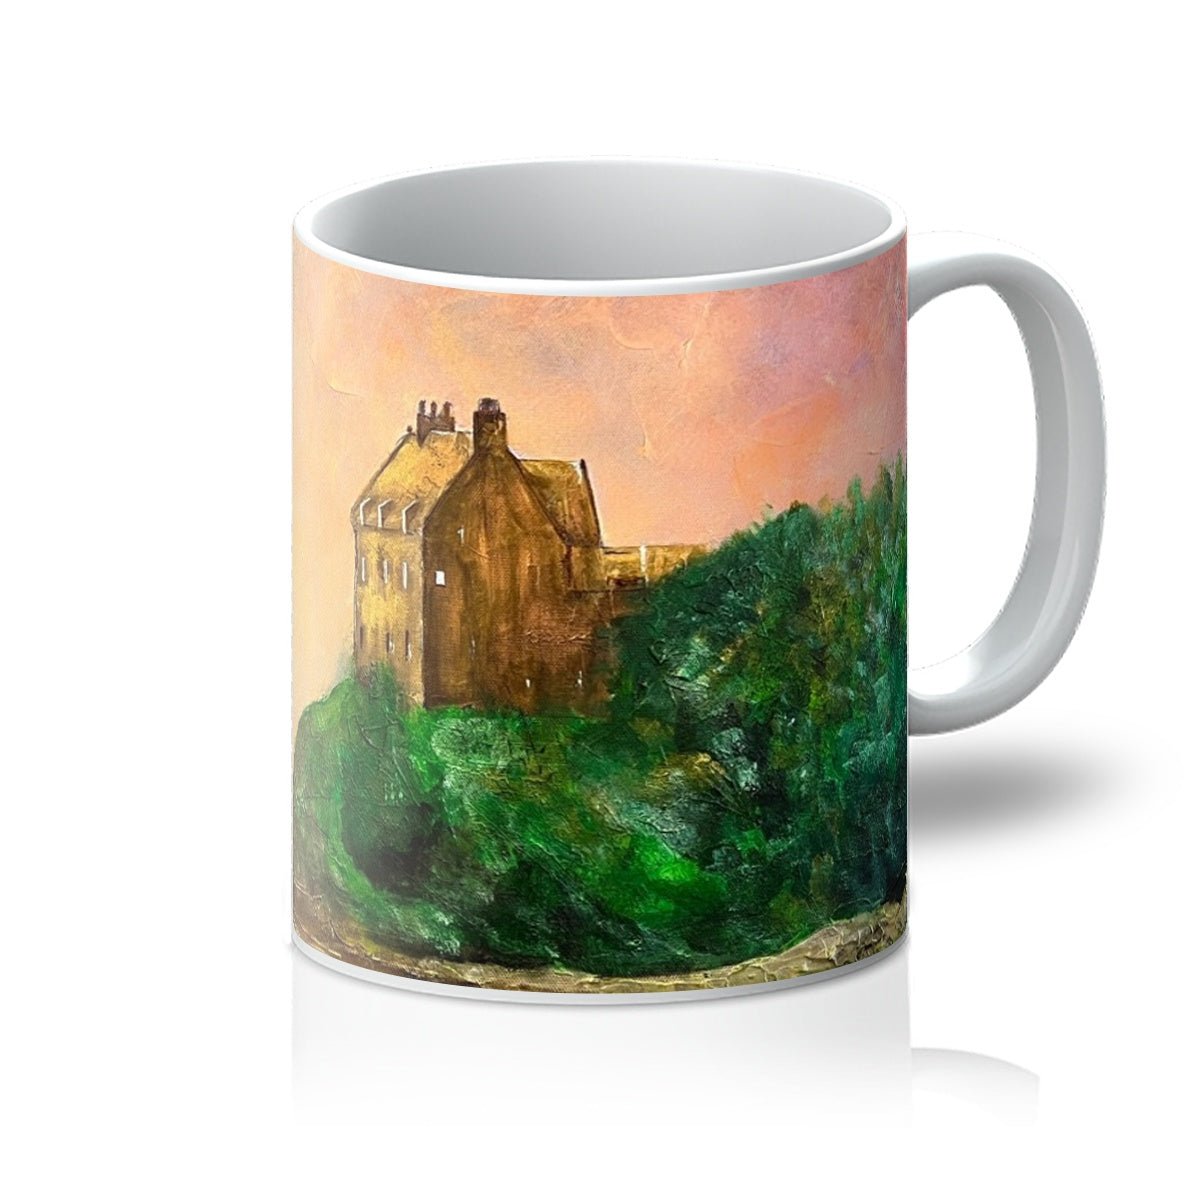 Duntrune Castle Art Gifts Mug-Mugs-Historic & Iconic Scotland Art Gallery-11oz-White-Paintings, Prints, Homeware, Art Gifts From Scotland By Scottish Artist Kevin Hunter